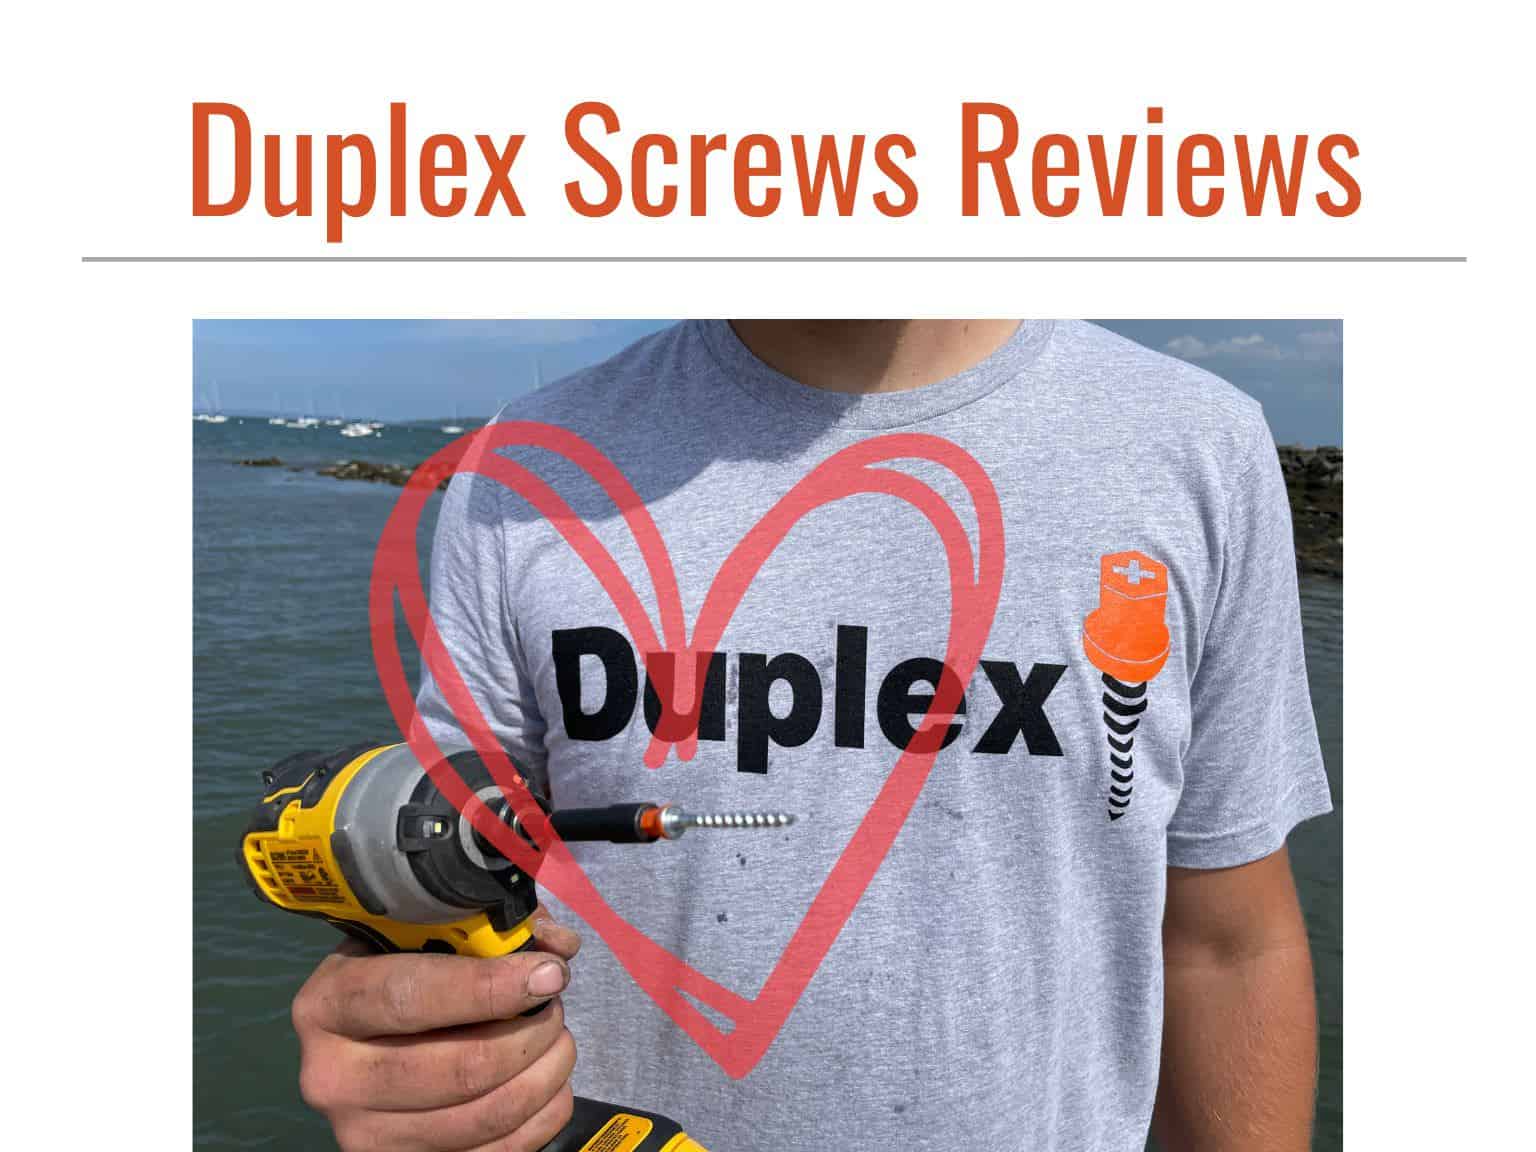 Reviews of Duplex Screws